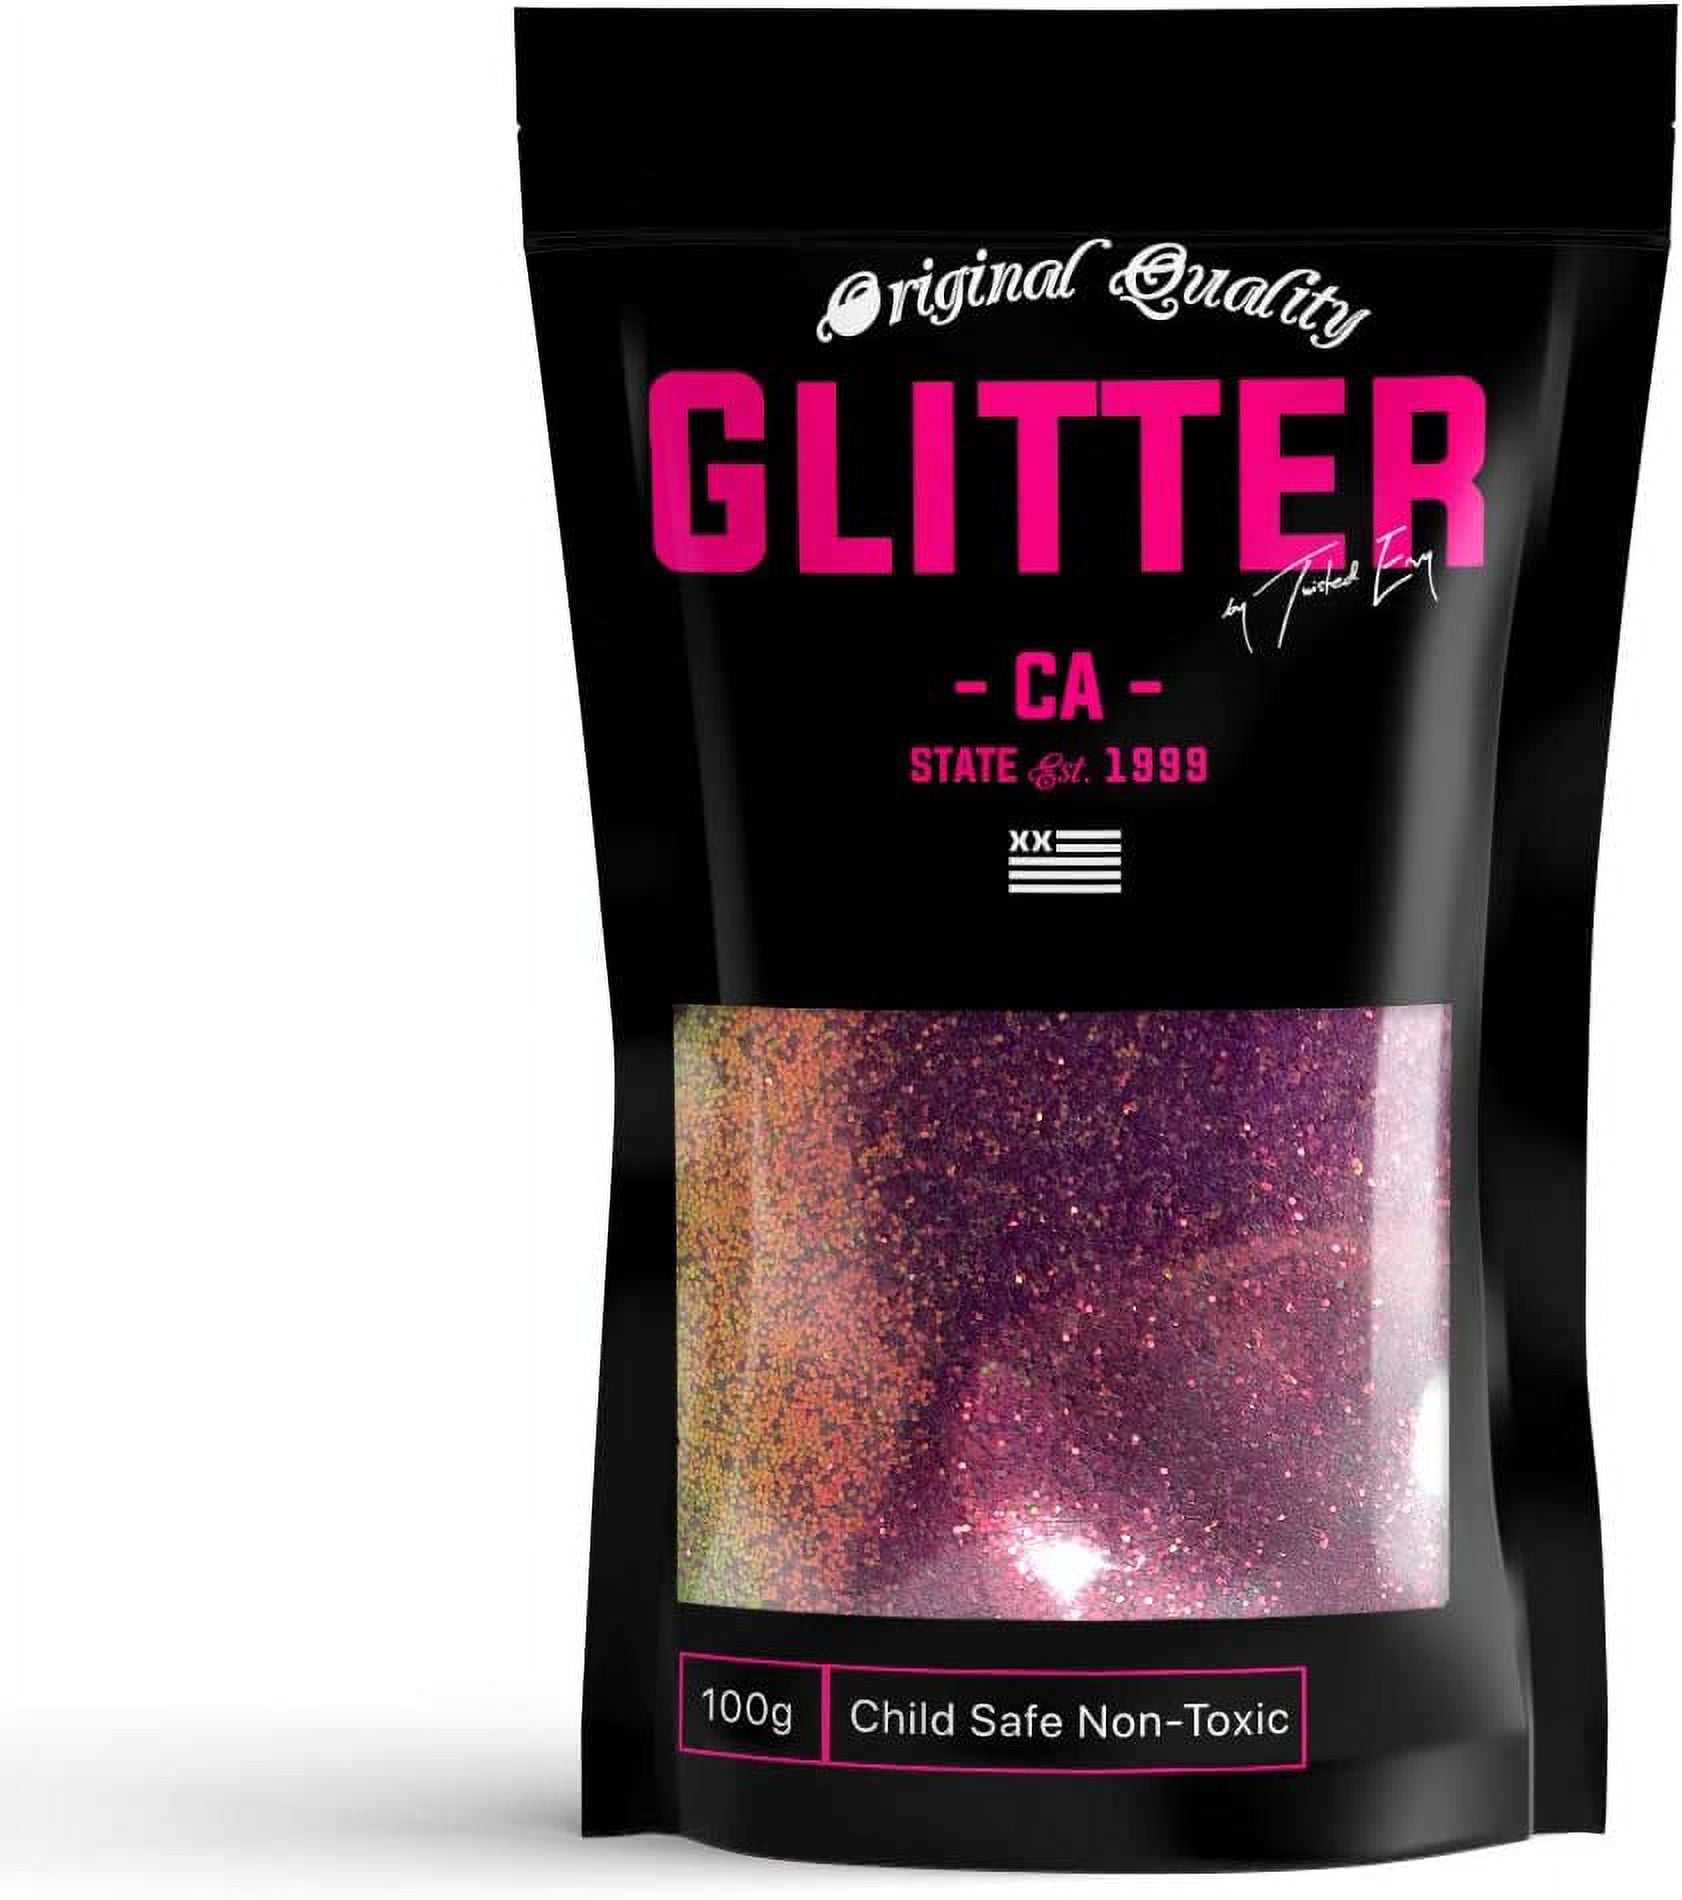 Sulyn Extra Fine Glitter for Crafts, Neon Orange, 2.5 oz